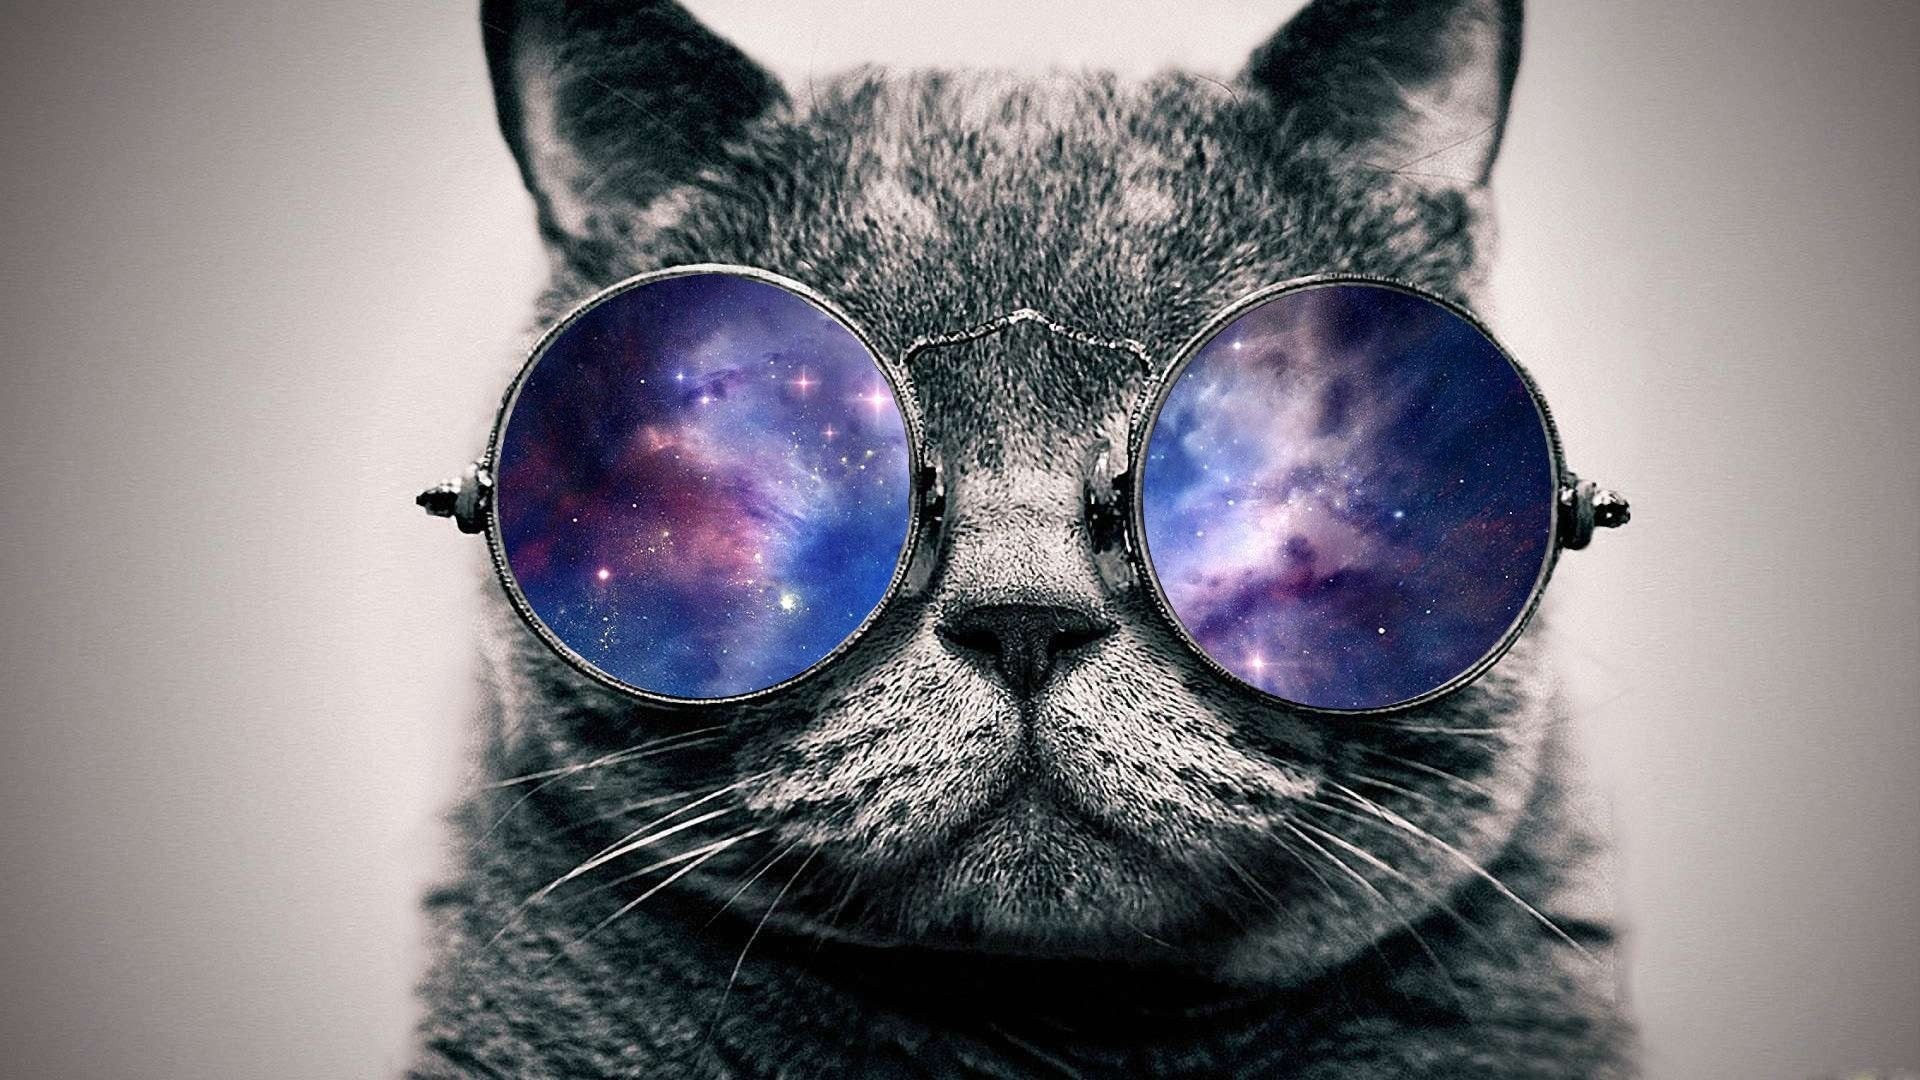 Cat With Glasses wallpaper for desktop